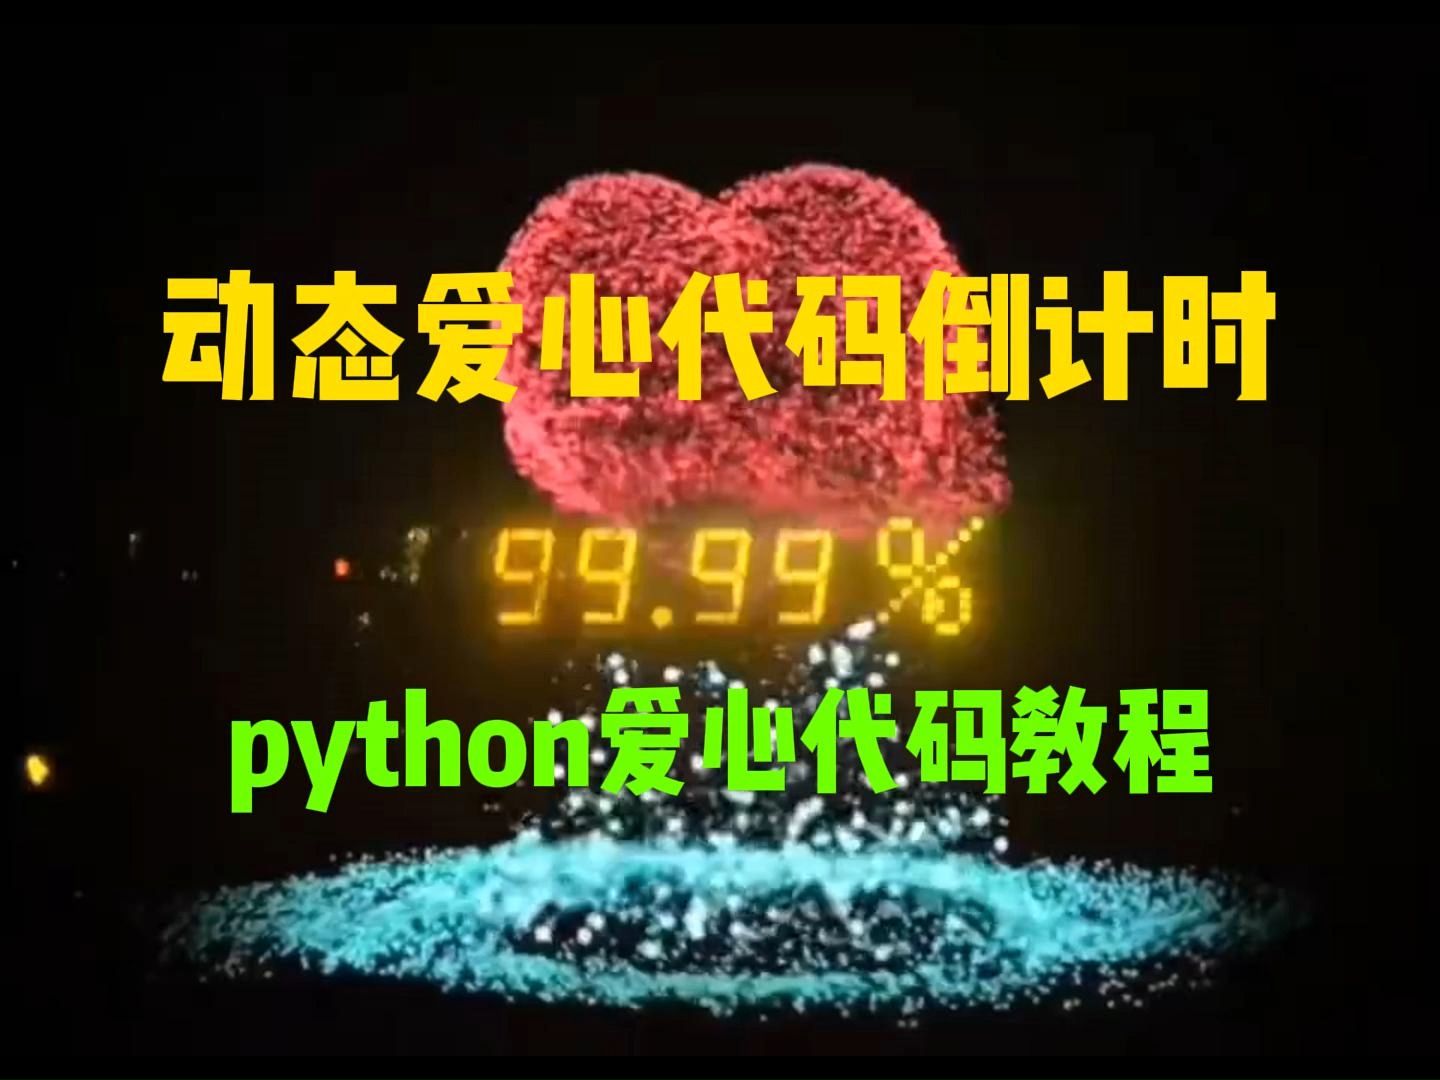 【python代码】动态爱心代码教程，快拿去祝家里的女神节日快乐